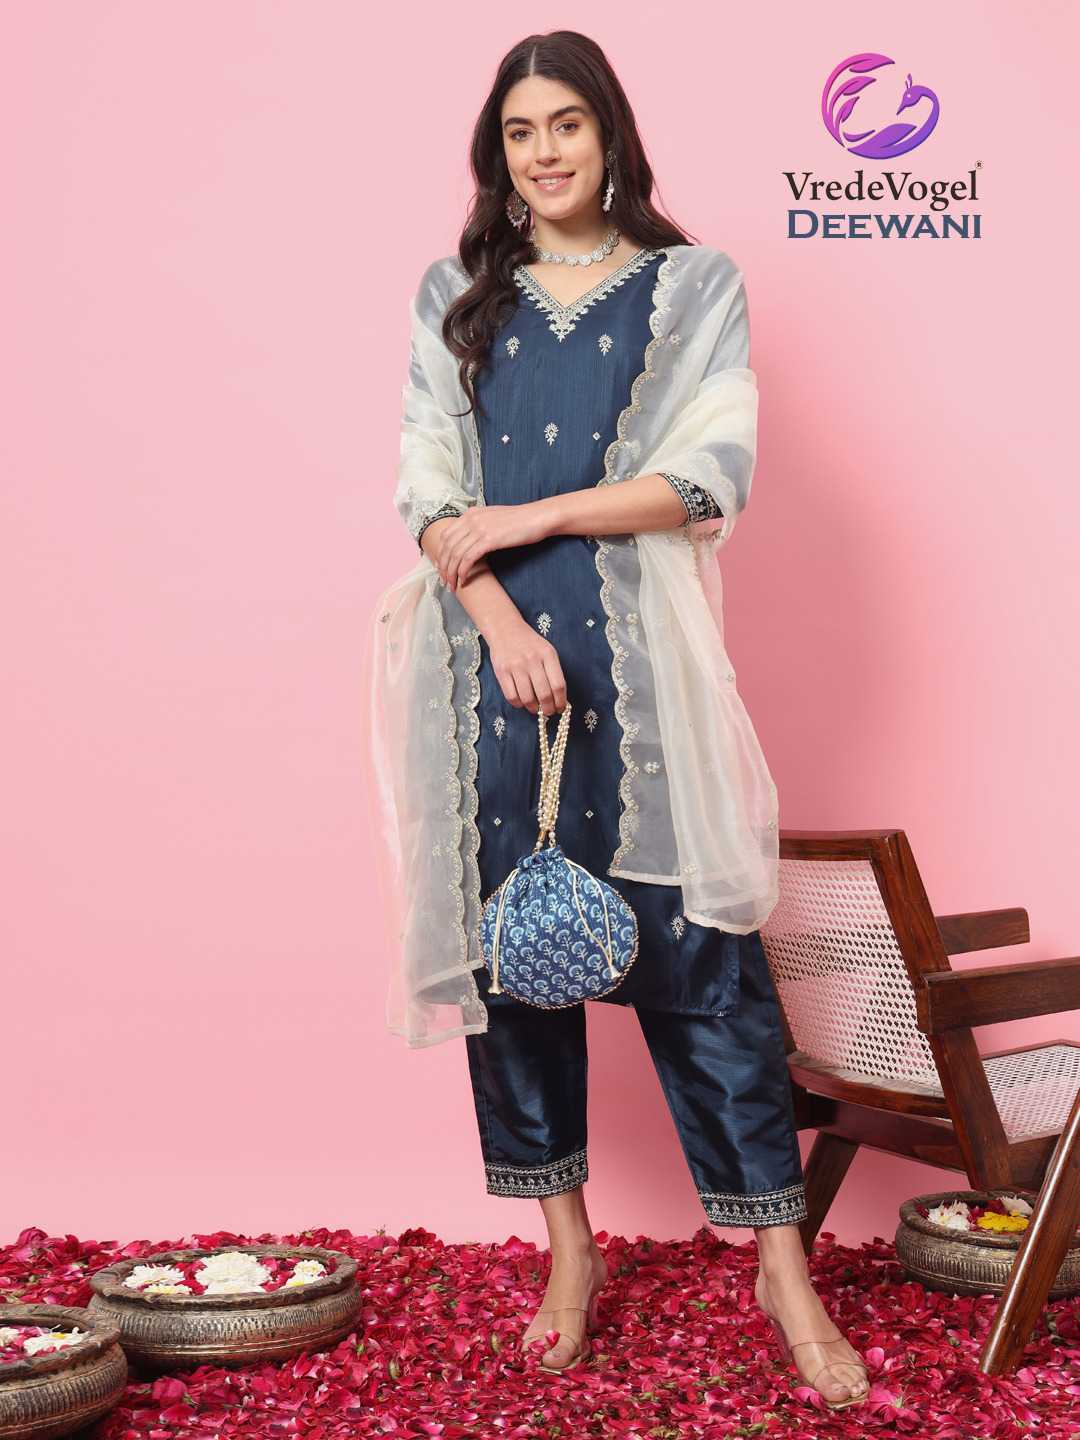 vredevogel presents deewani hit design organza full stitch salwar kameez